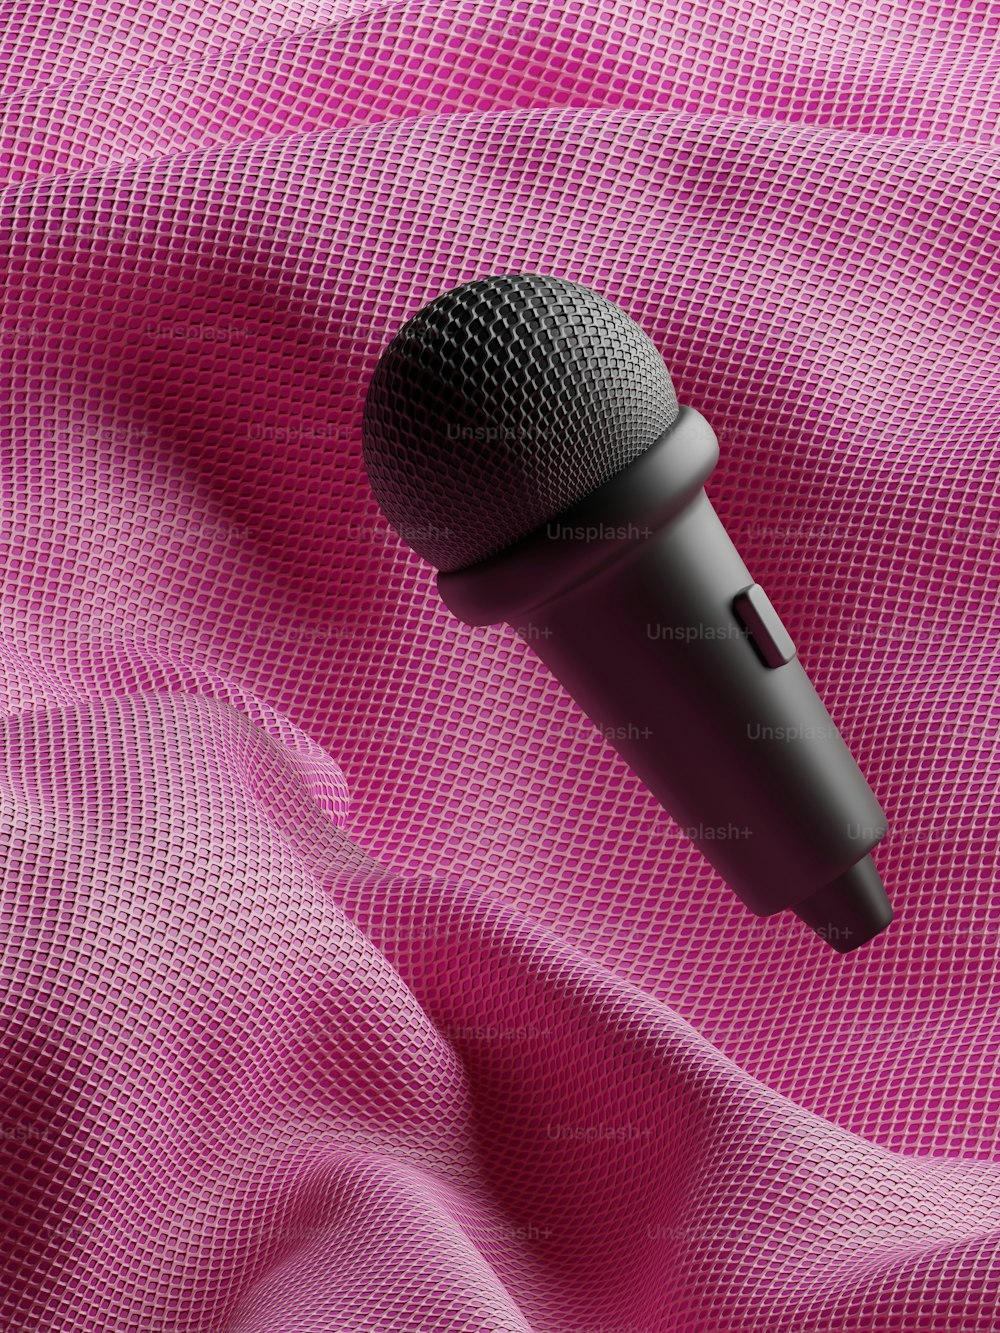 un micrófono sobre una tela rosa